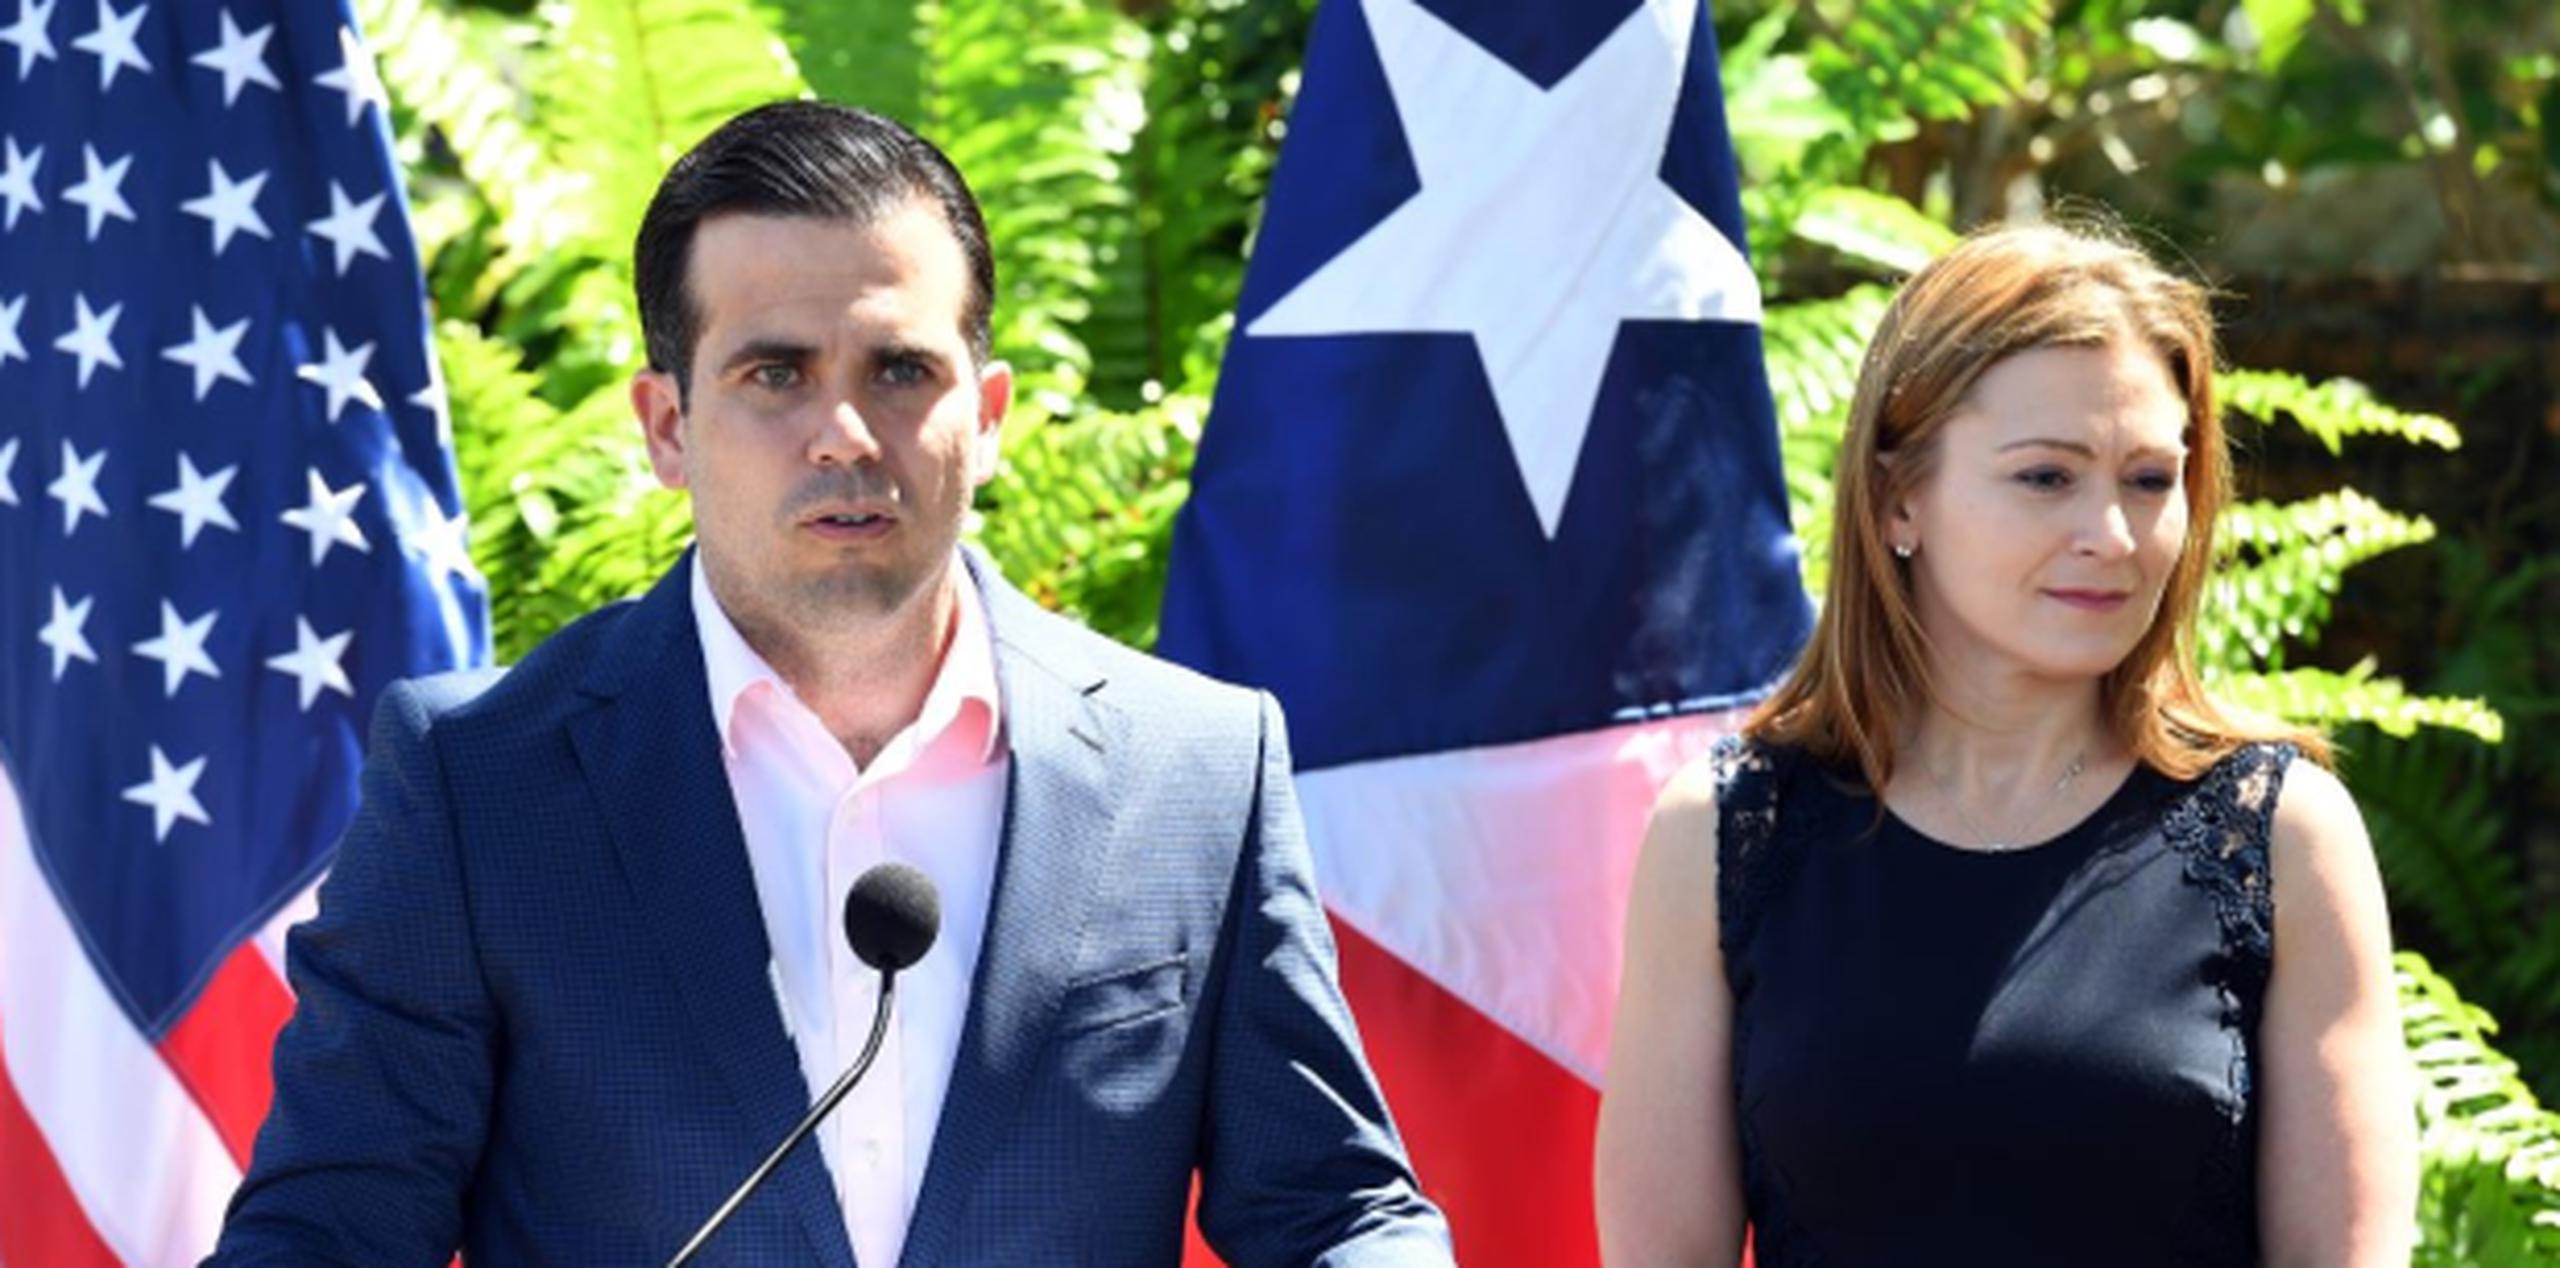 Rosselló volvió a insistir en que la JSF no puede dictar la política pública del gobierno de Puerto Rico. (andre.kang@gfrmedia.com)